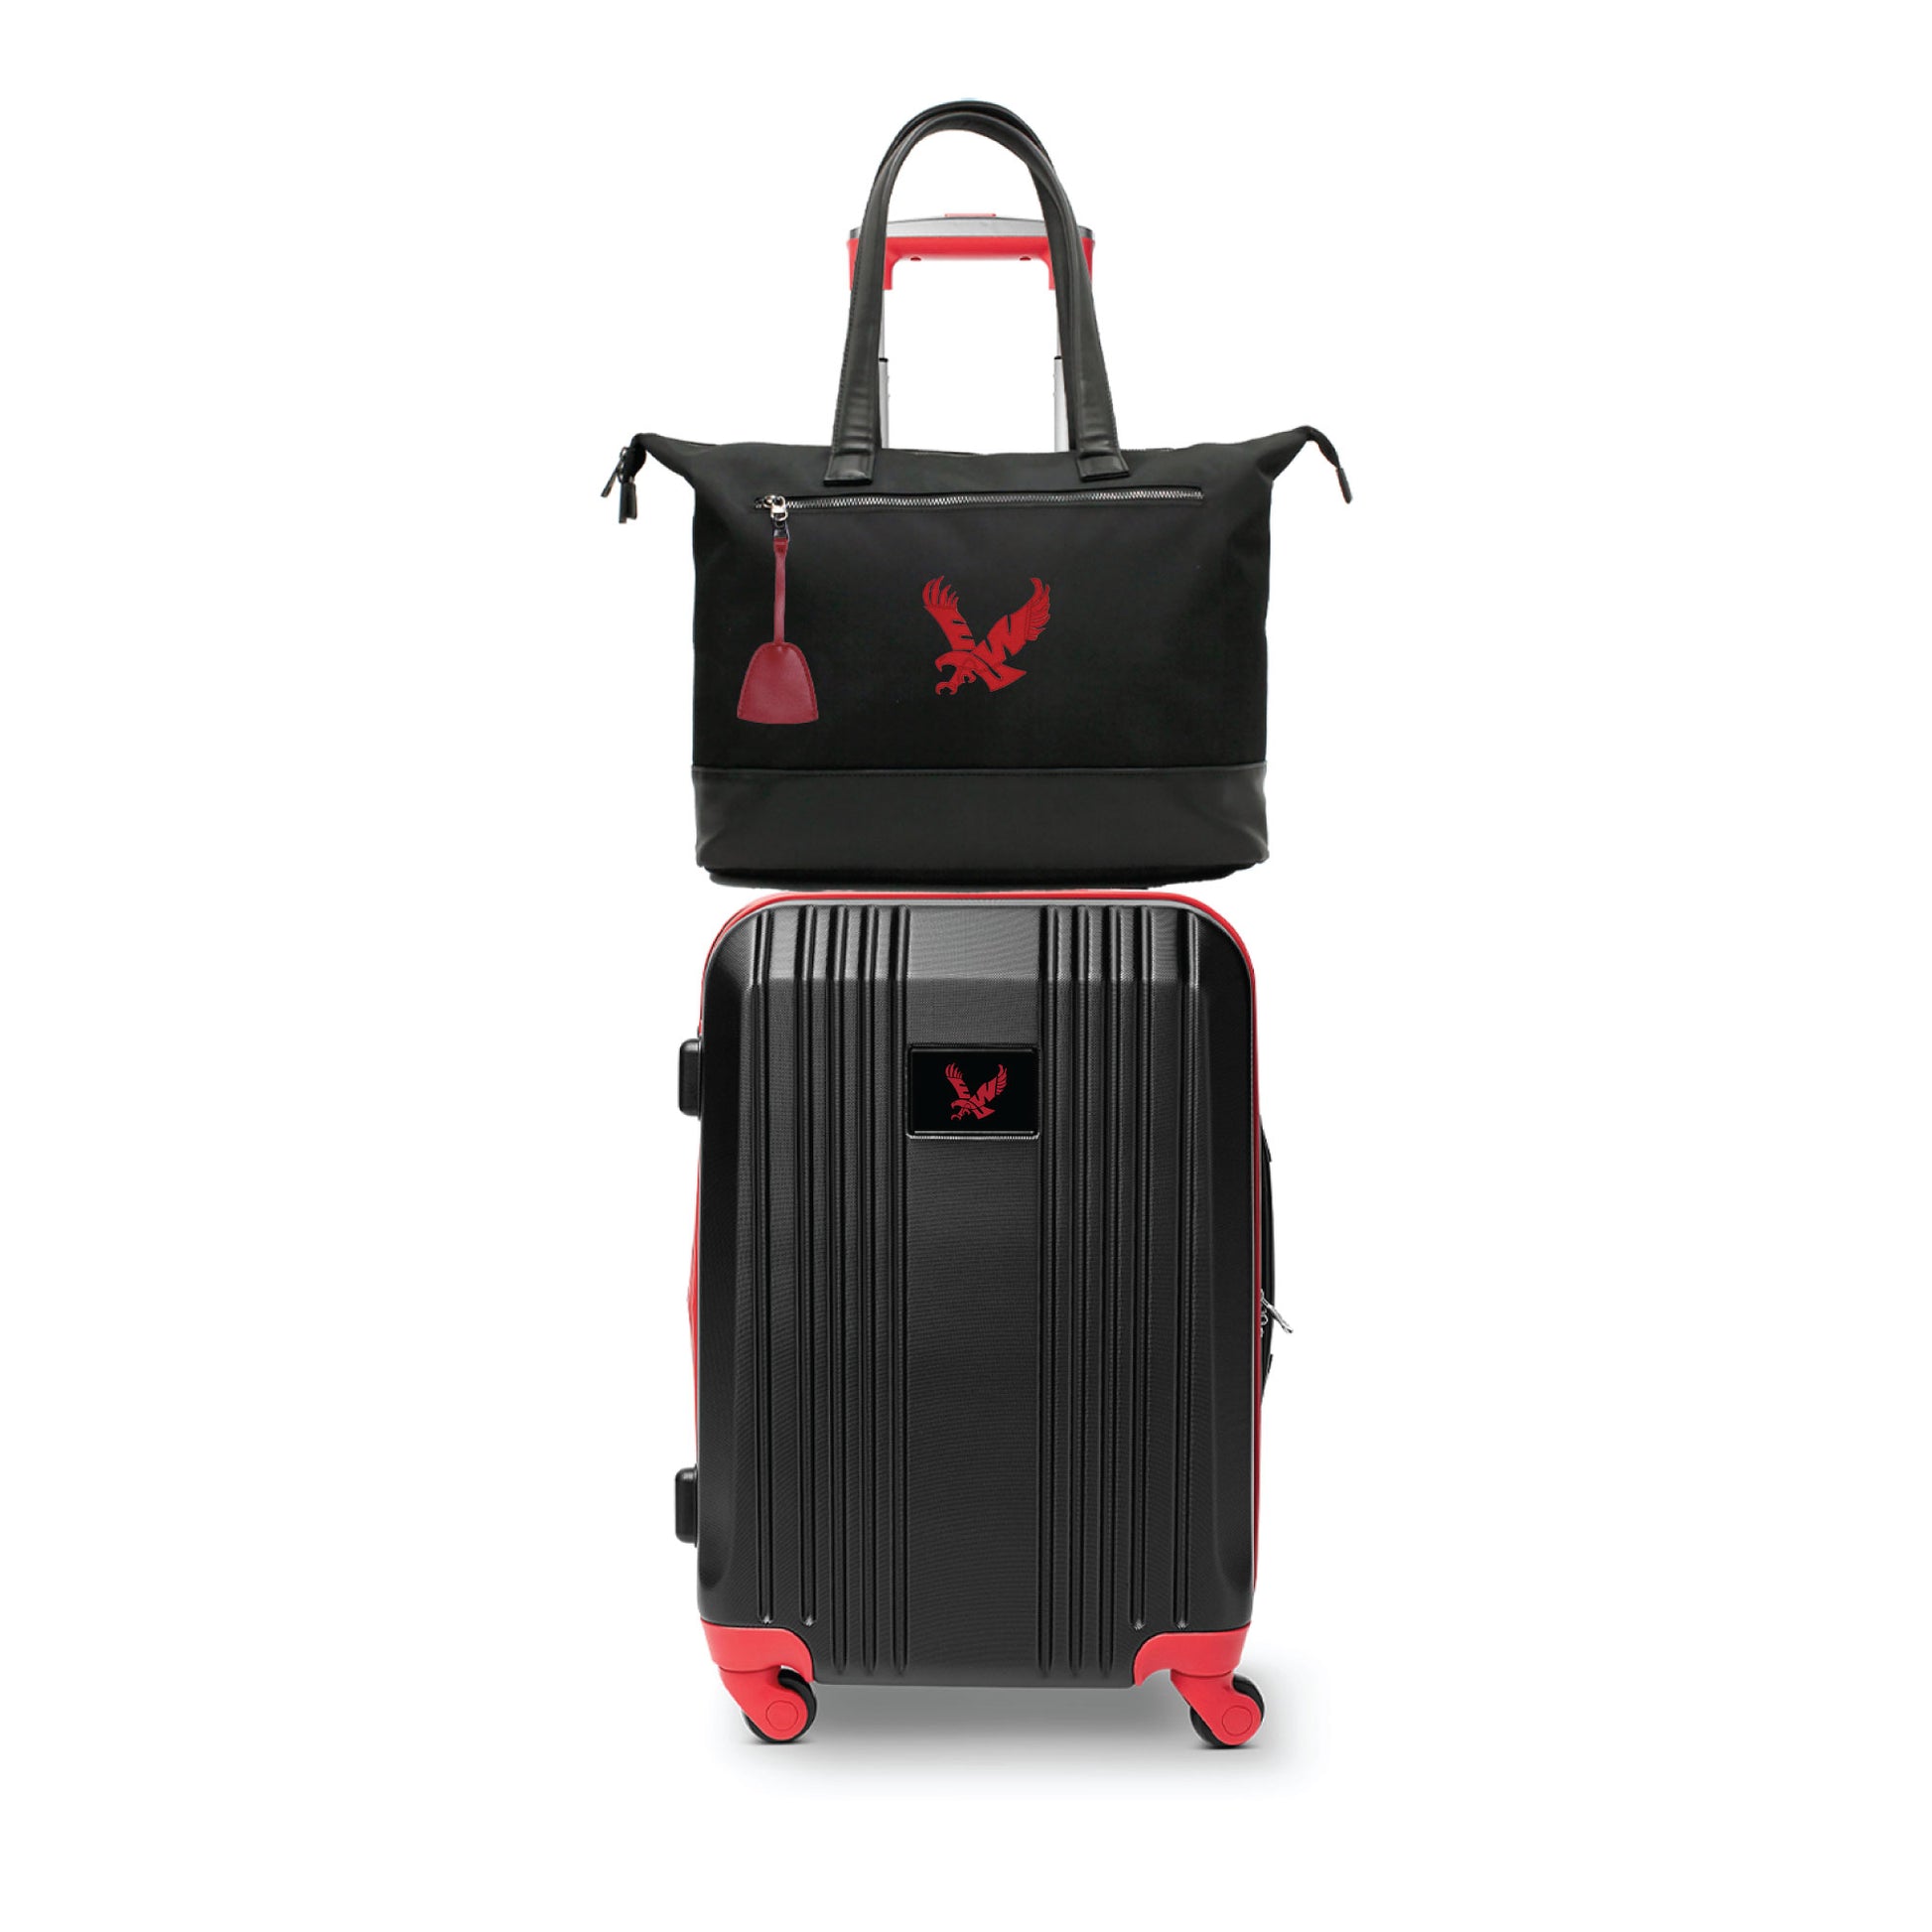 Eastern Washington Eagles Premium Laptop Tote Bag and Luggage Set